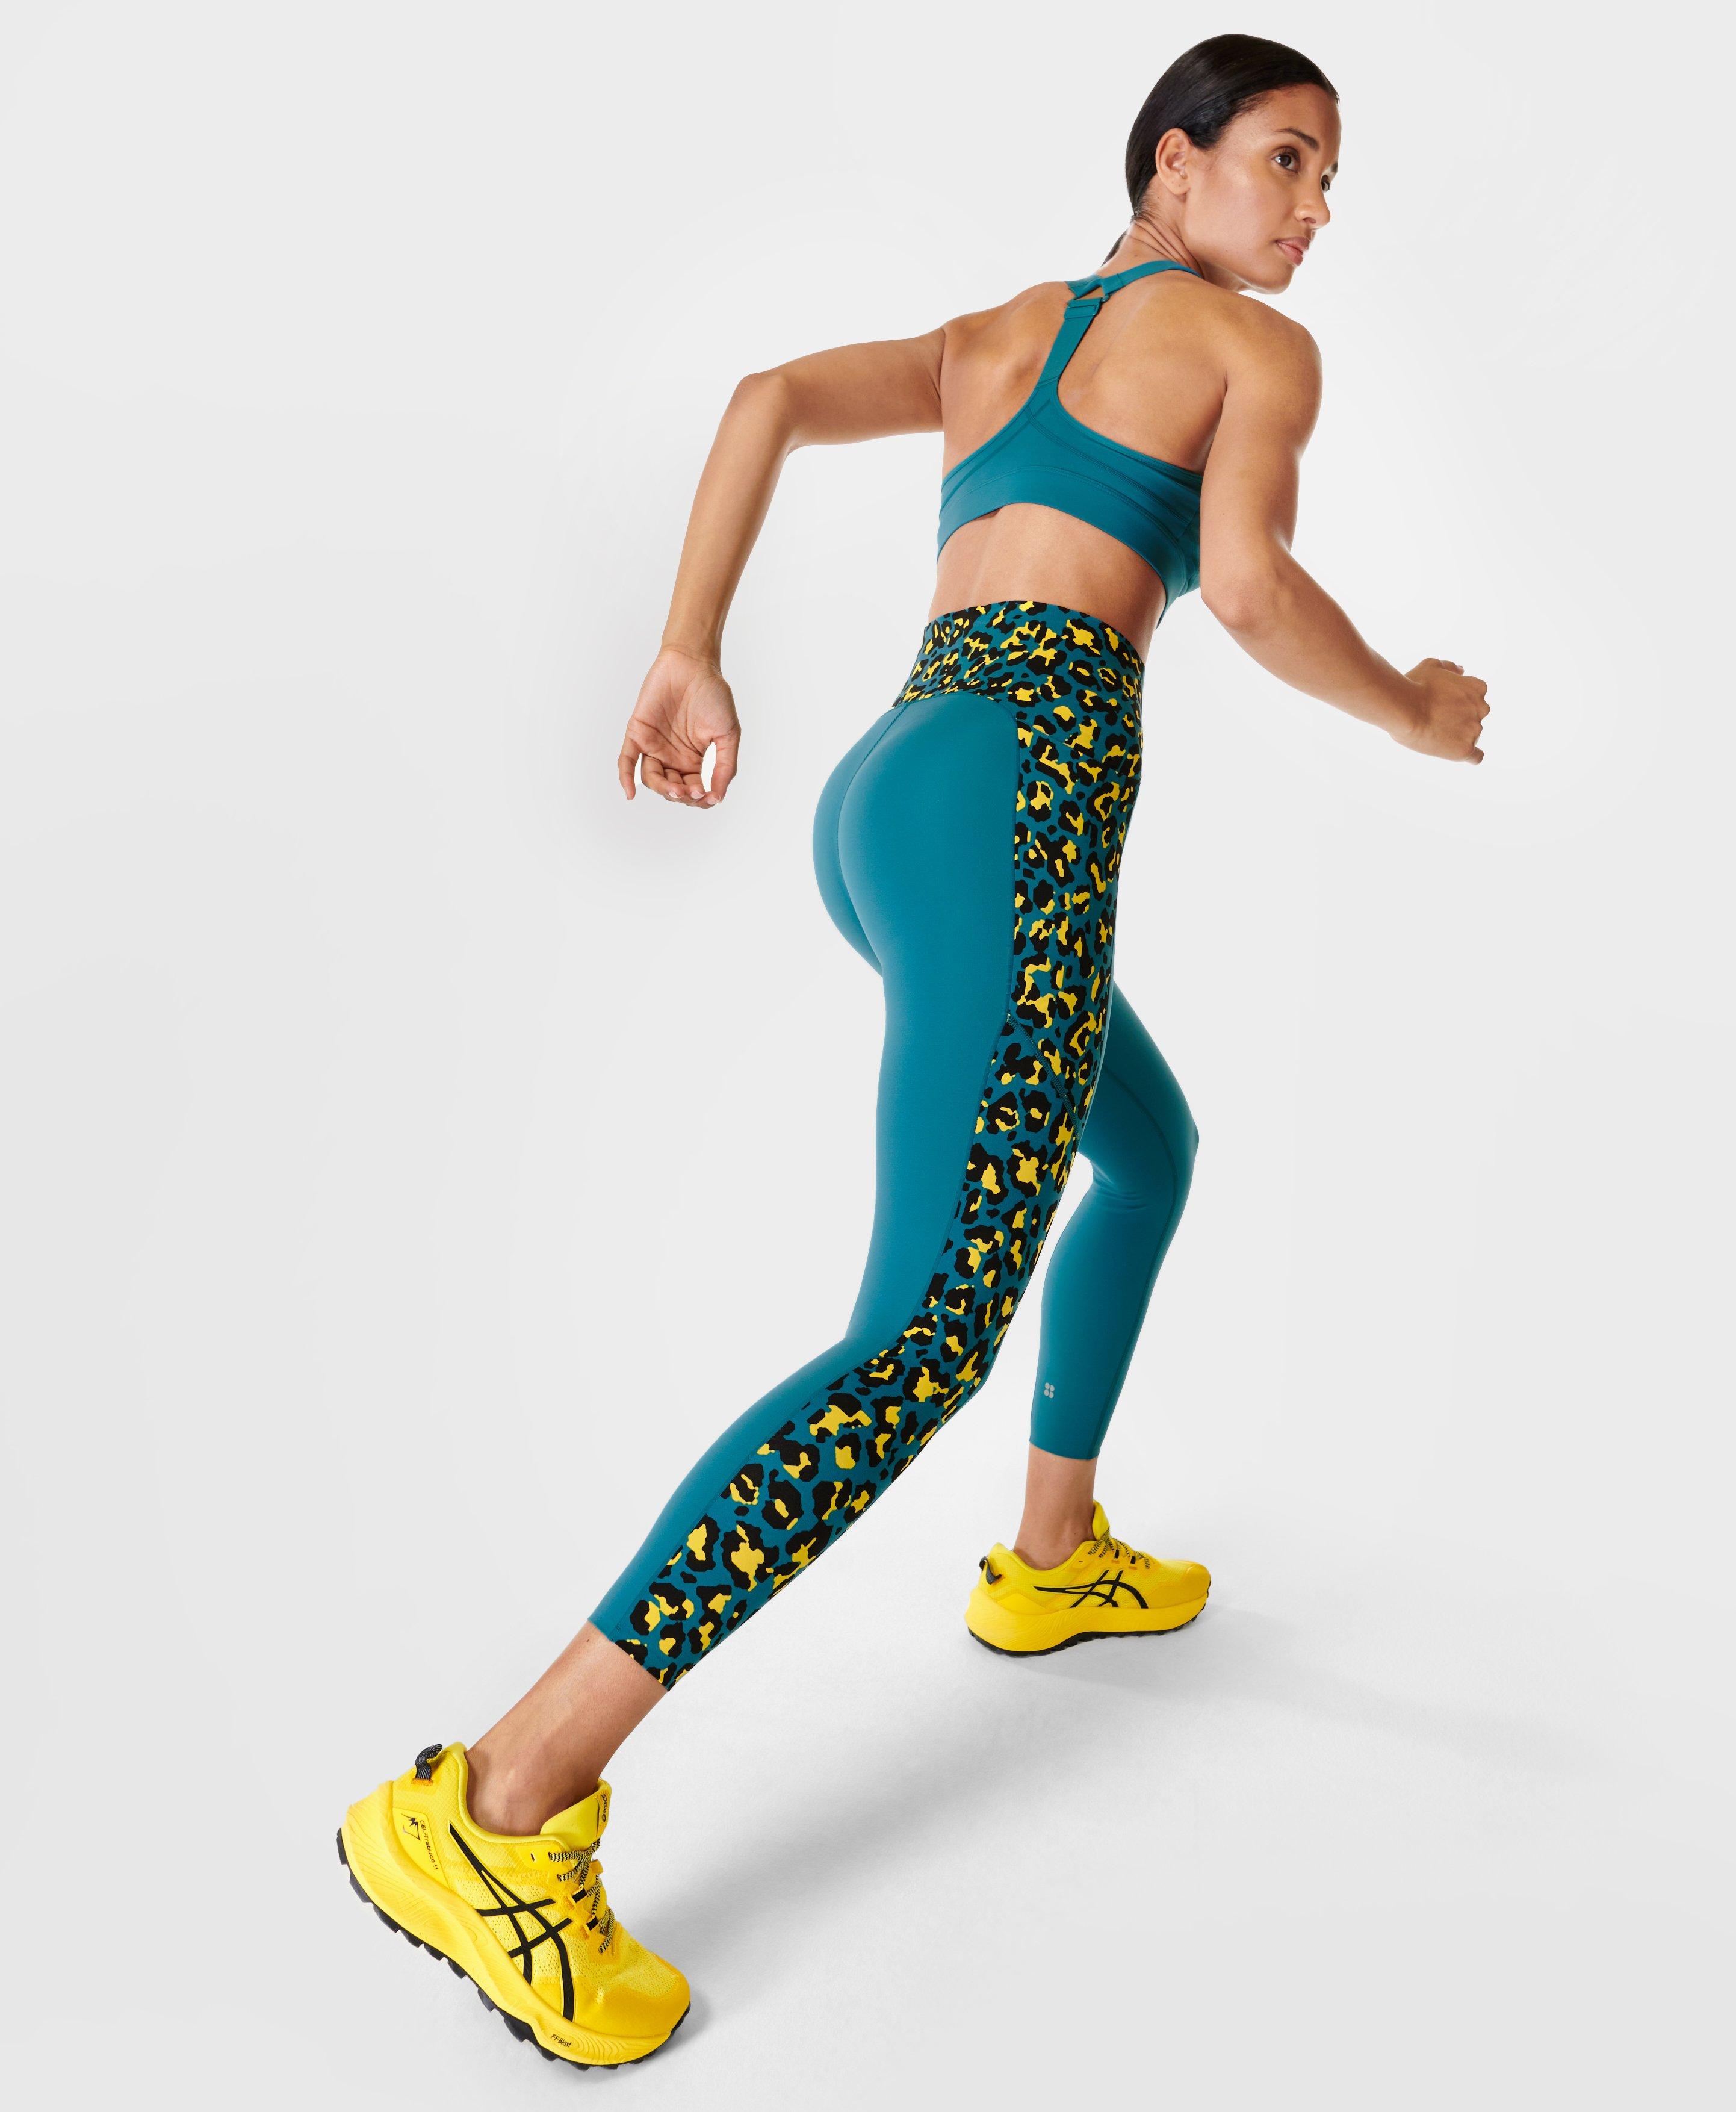 Women's Adidas Leggings Leopard Print Gym Tight UK 22 RRP £45